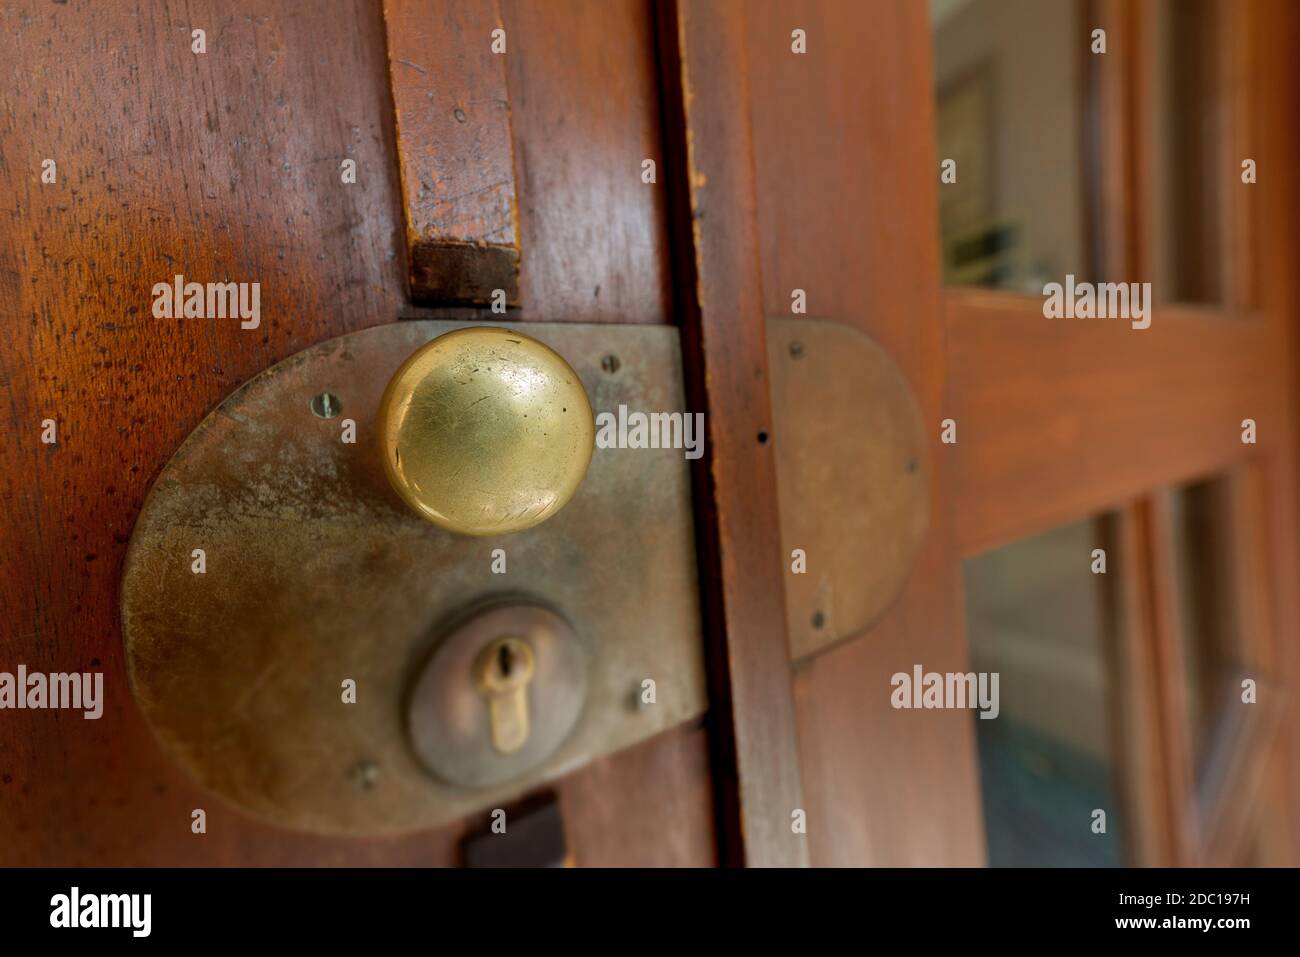 Tür mit Türknopf - Eingang, Stockfoto